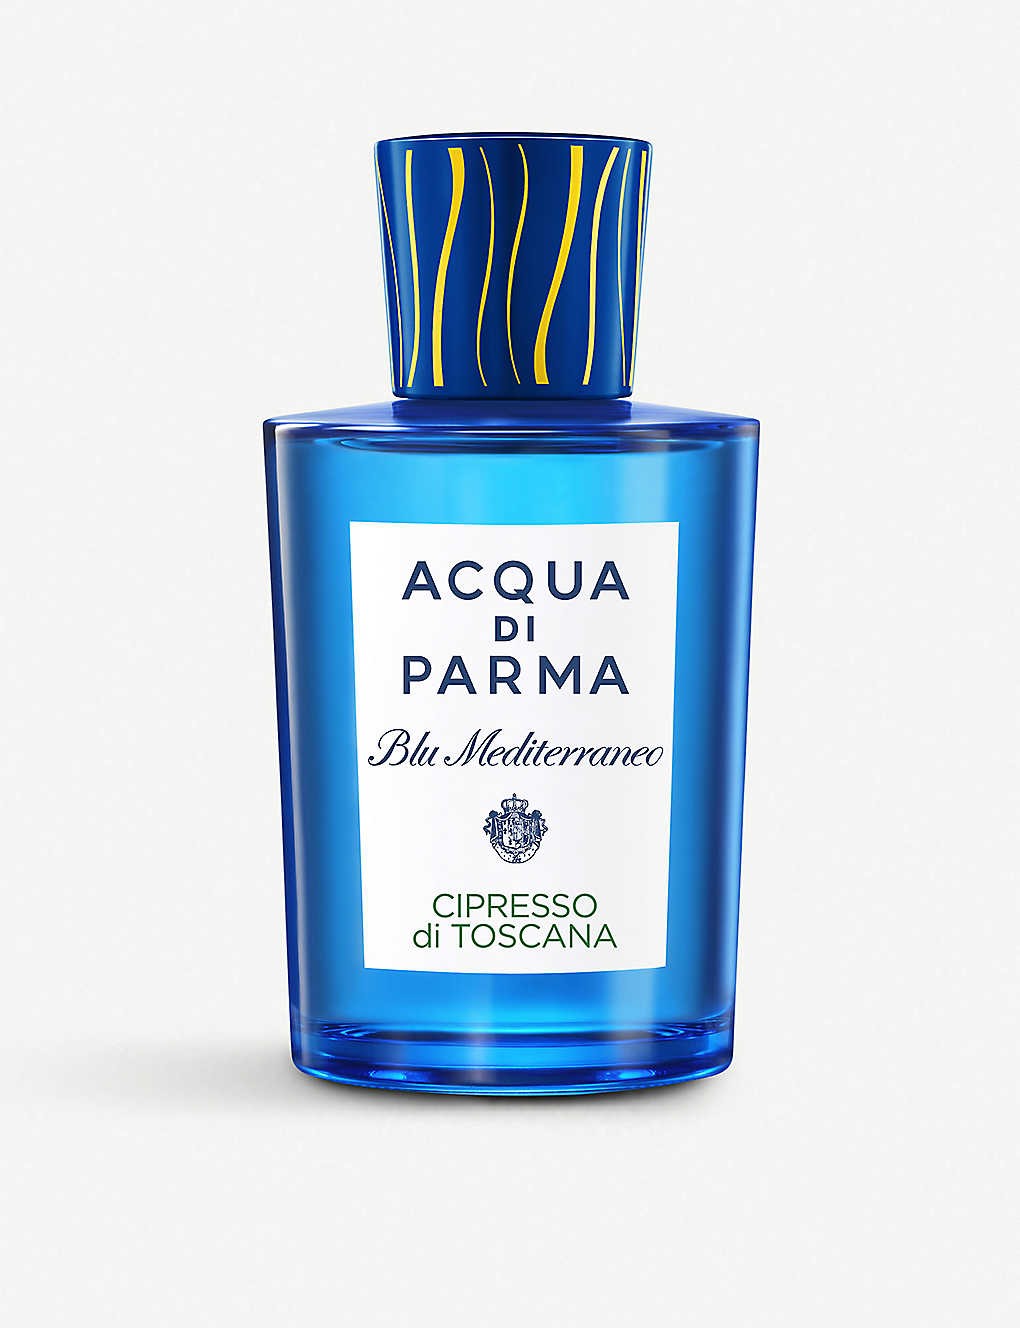 Изображение парфюма Acqua Di Parma Blu Mediterraneo - Cipresso di Toscana